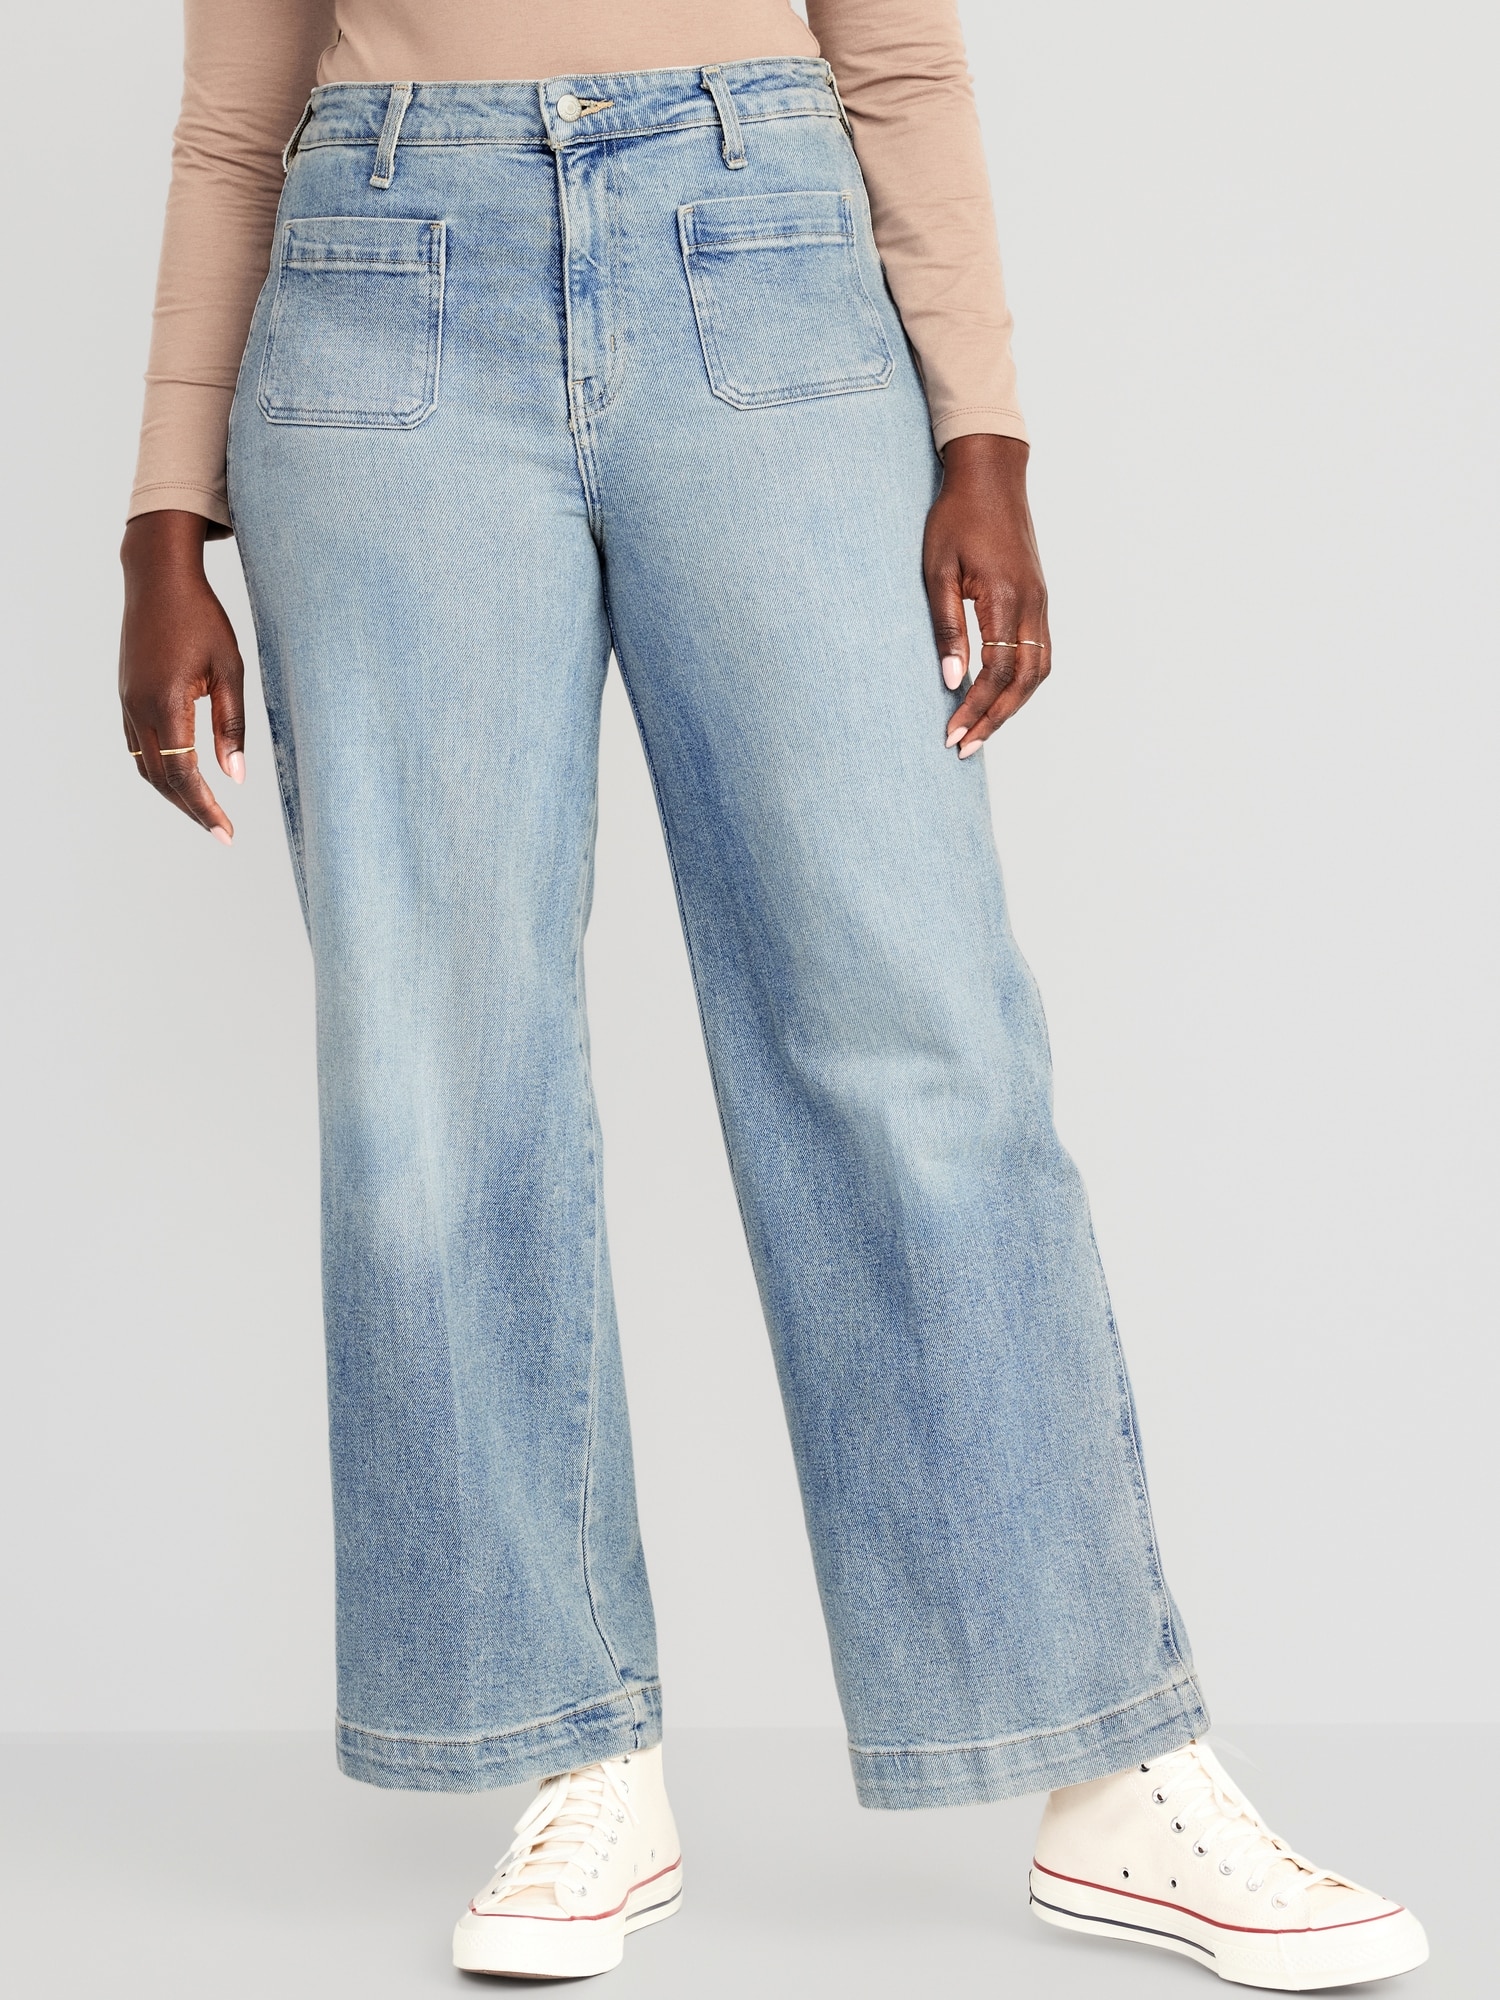 Leggings fit style jeans female denim pants Vector Image